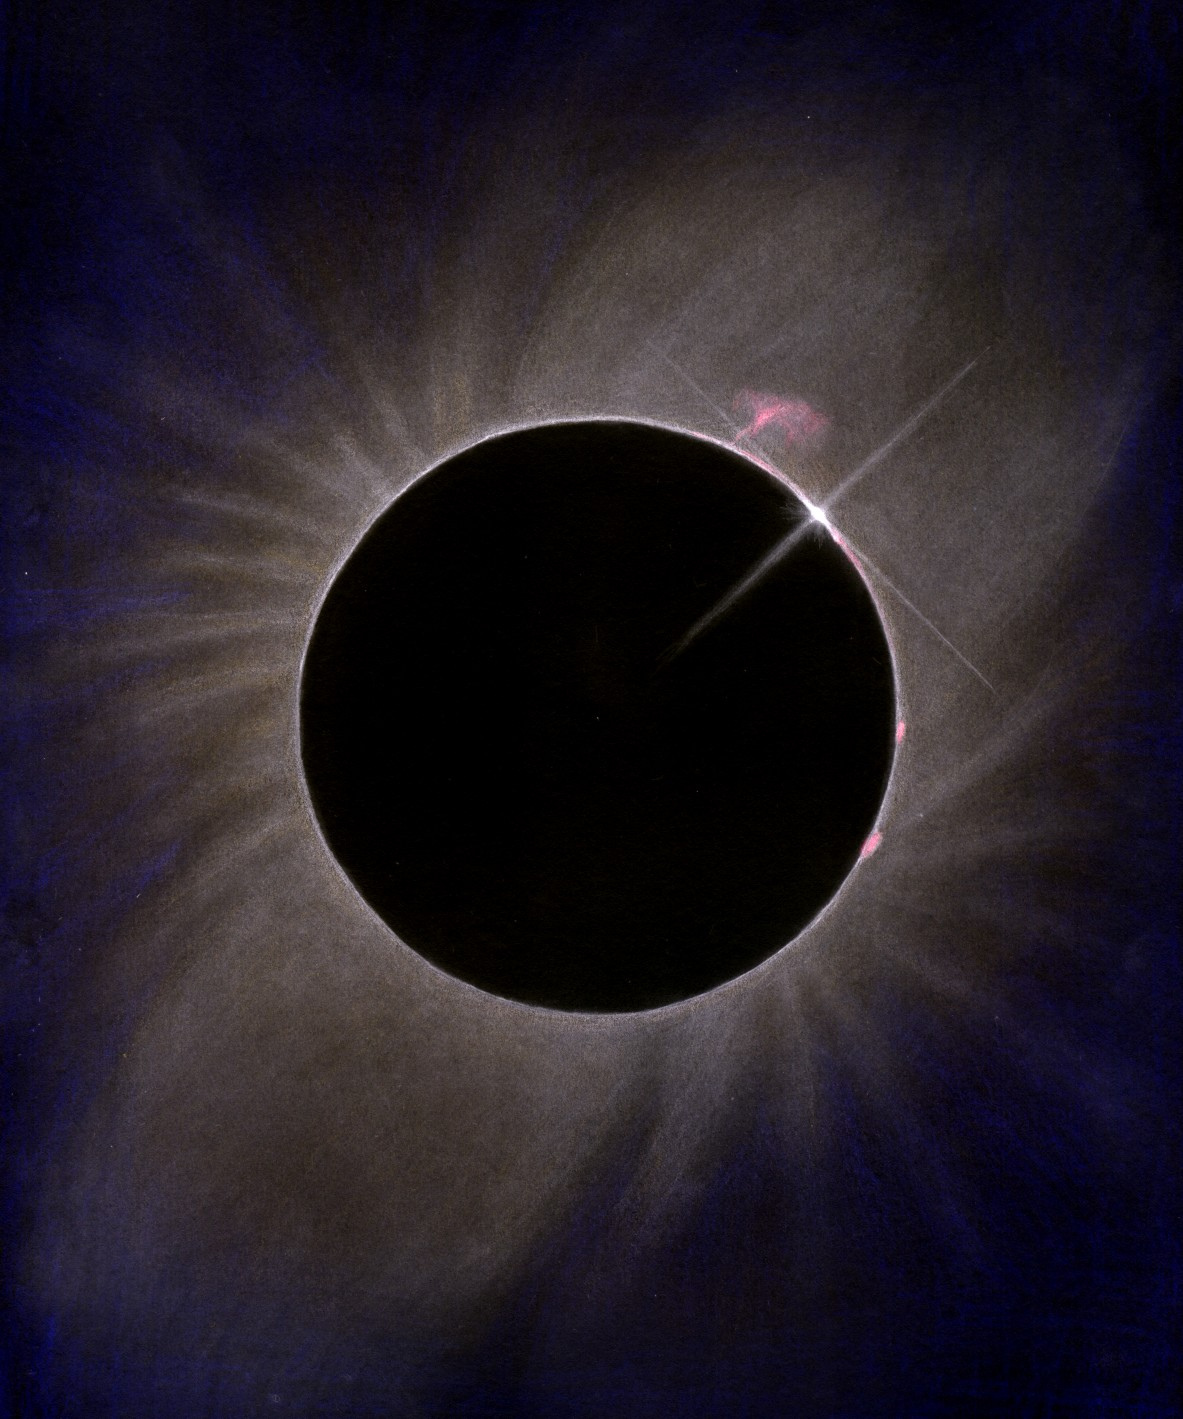 eclipse-soleil-020719-t203x40.jpg.41ffd05af35caedeec9719664820a5a2.jpg